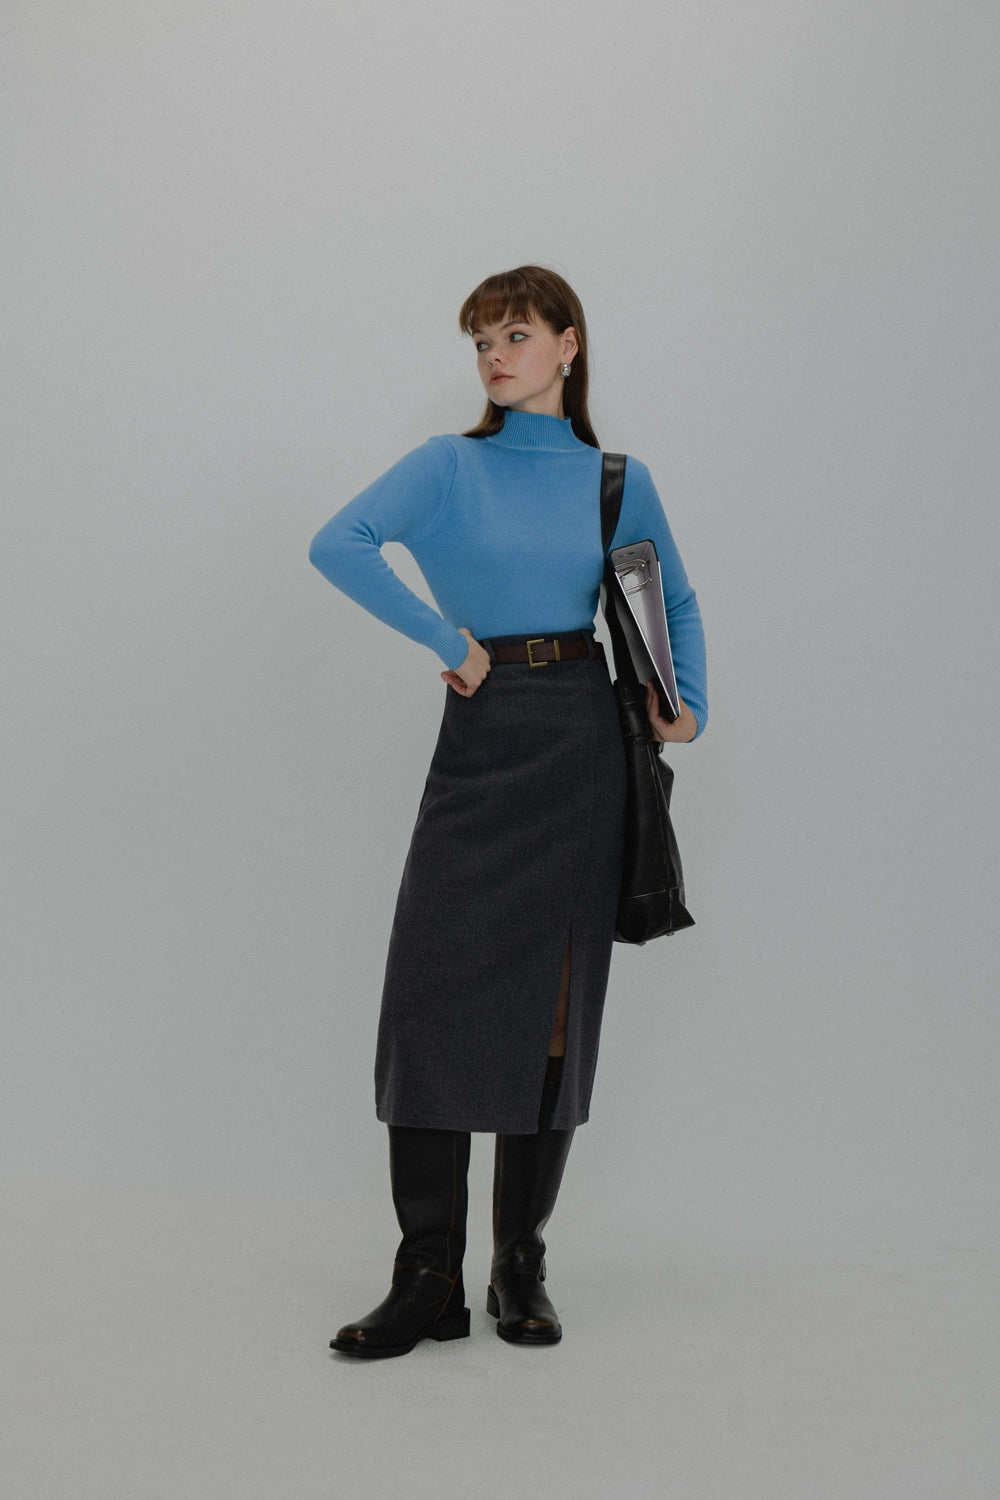 Stylish Women's Midi Skirt with Asymmetrical Hem and Belt Detail